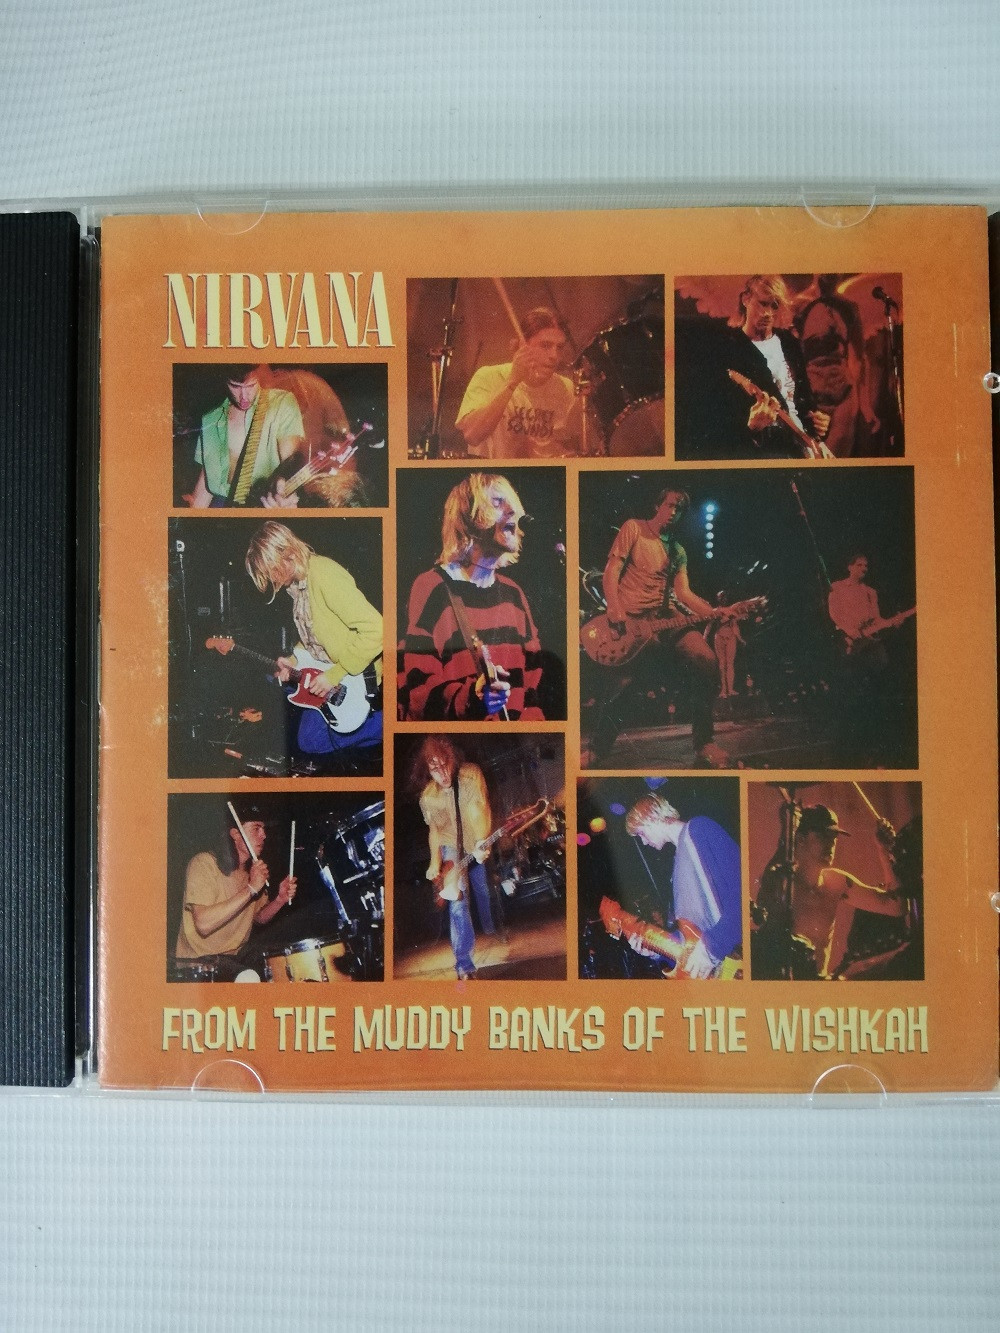 Imagen CD NIRVANA - FROM THE MUDDY BANKS OF THE WHISHKAH 1